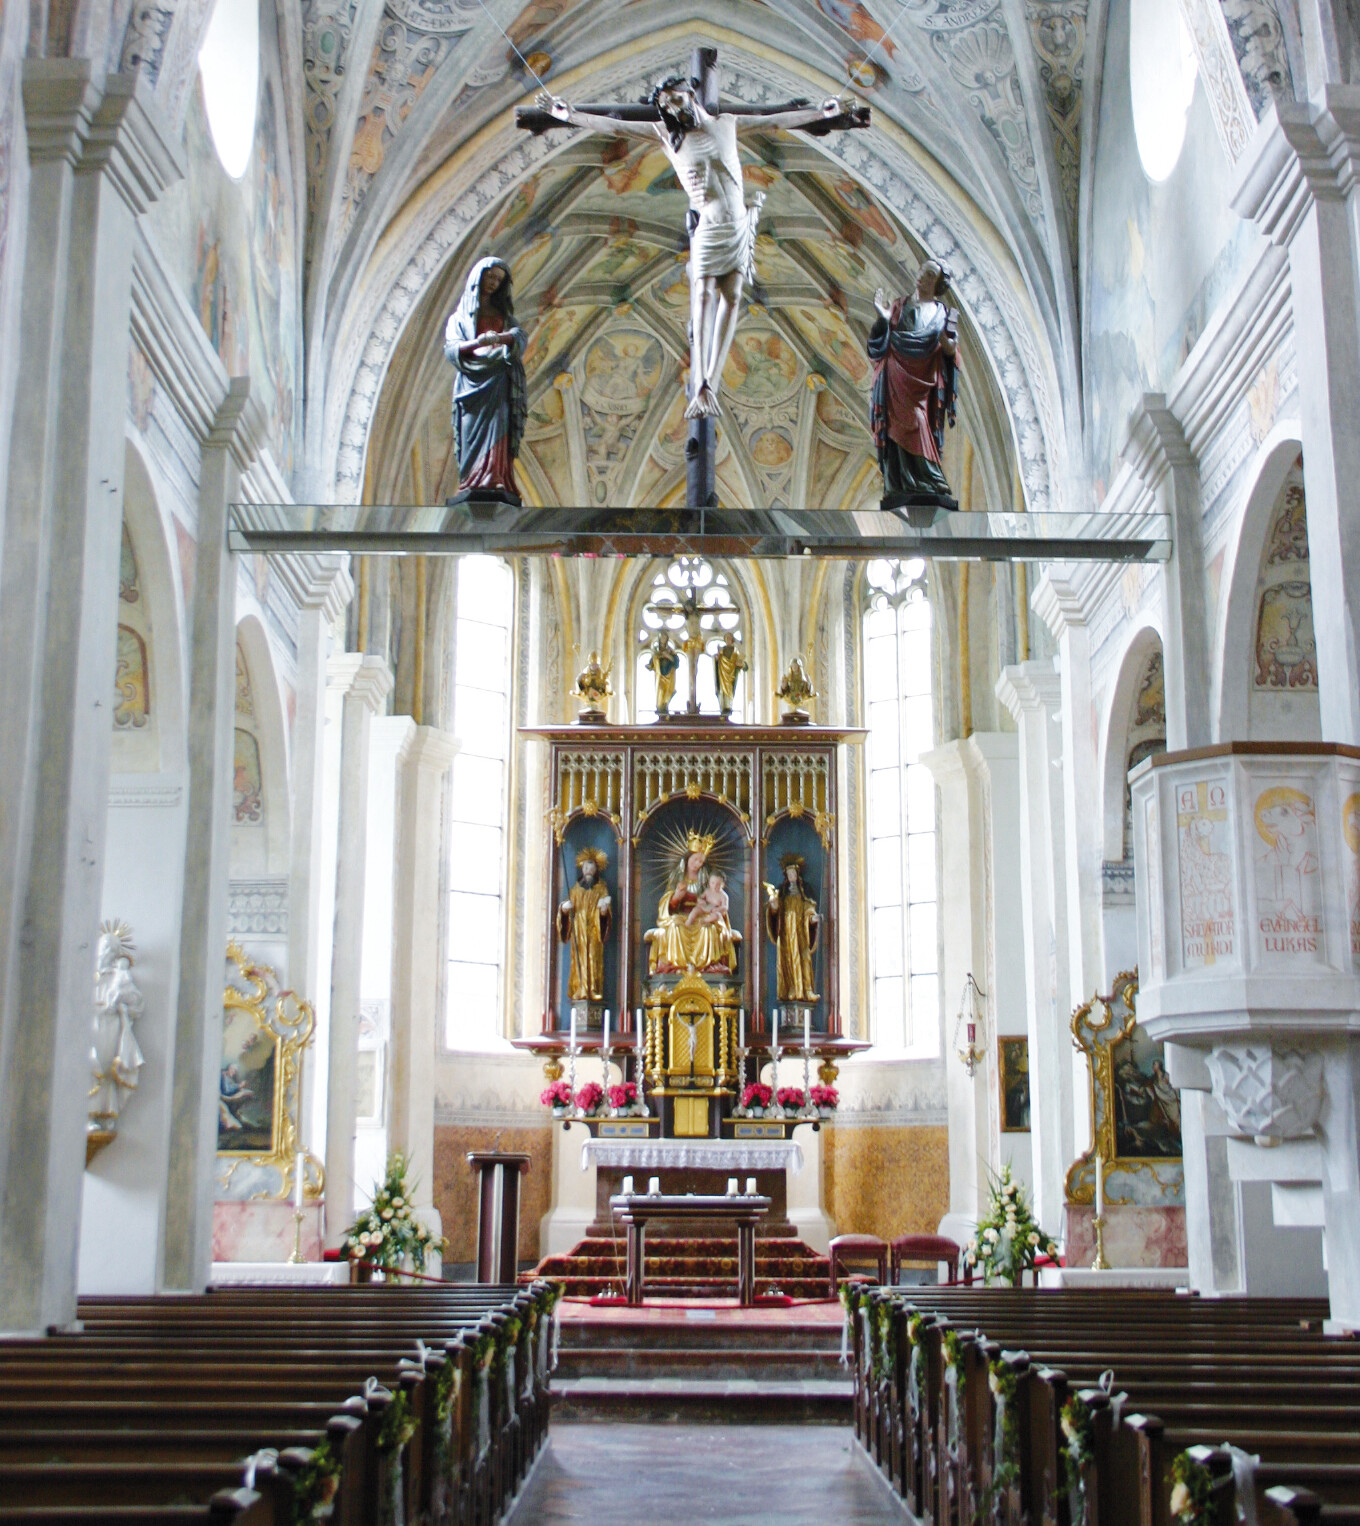 Blick in den Altarraum der ehemaligen Klosterkirche St. Lambert